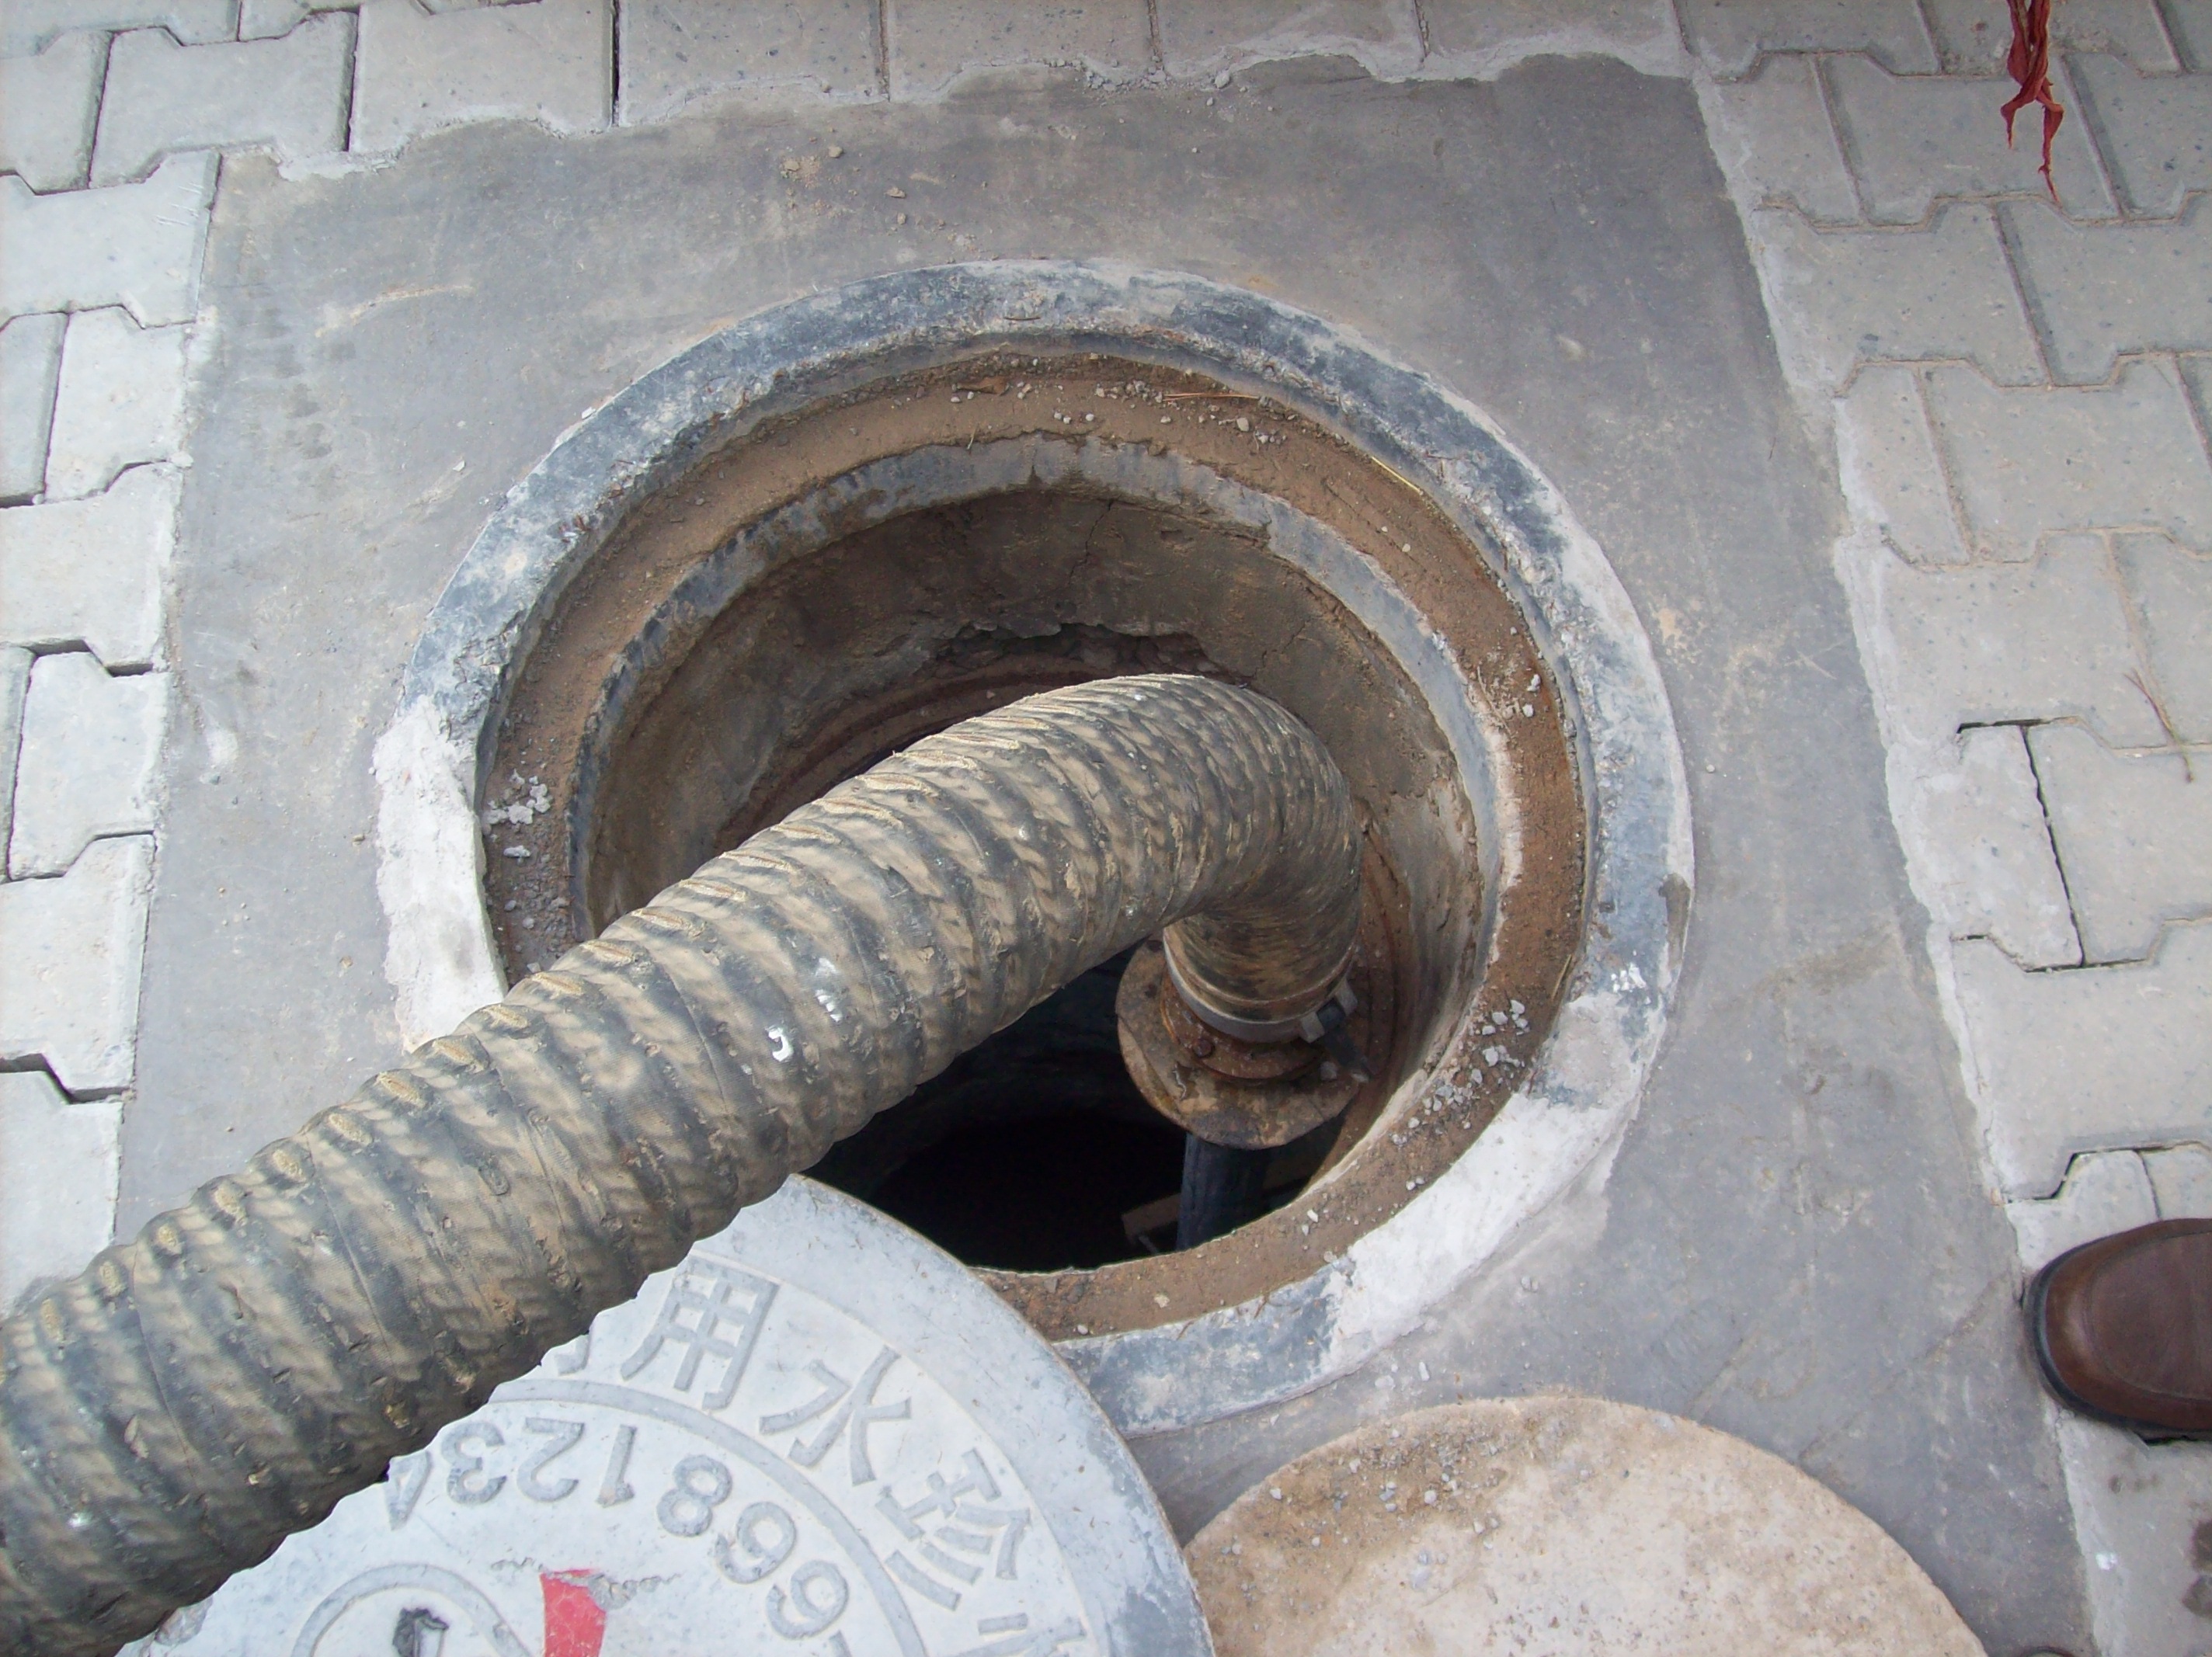 File:Urine tank emptying with vacuum truck (3010615730).jpg - Wikimedia Commons